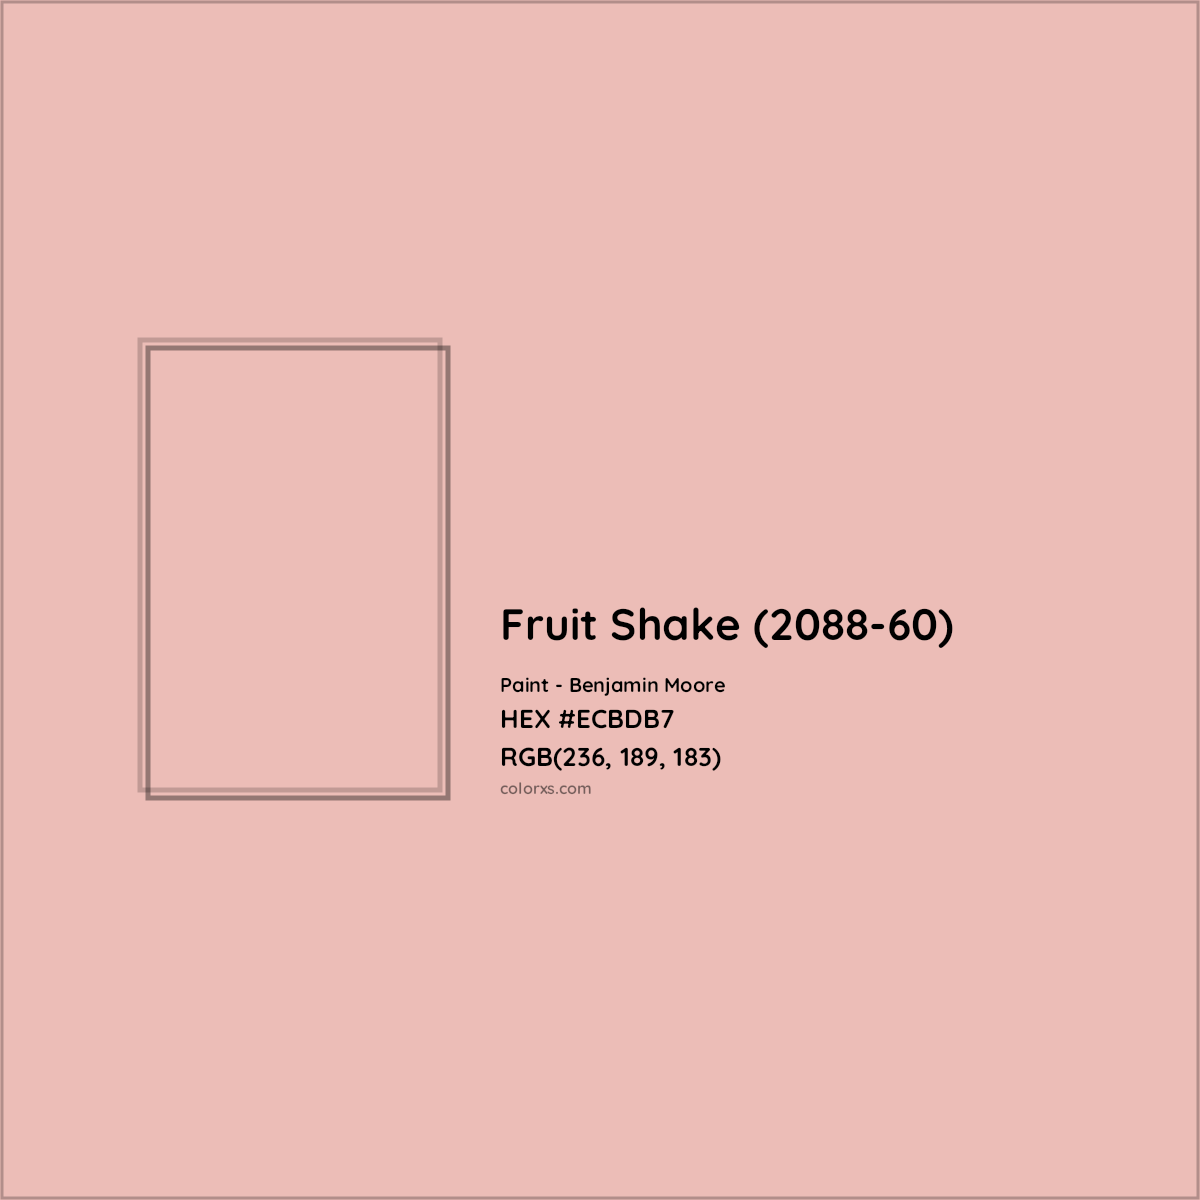 HEX #ECBDB7 Fruit Shake (2088-60) Paint Benjamin Moore - Color Code